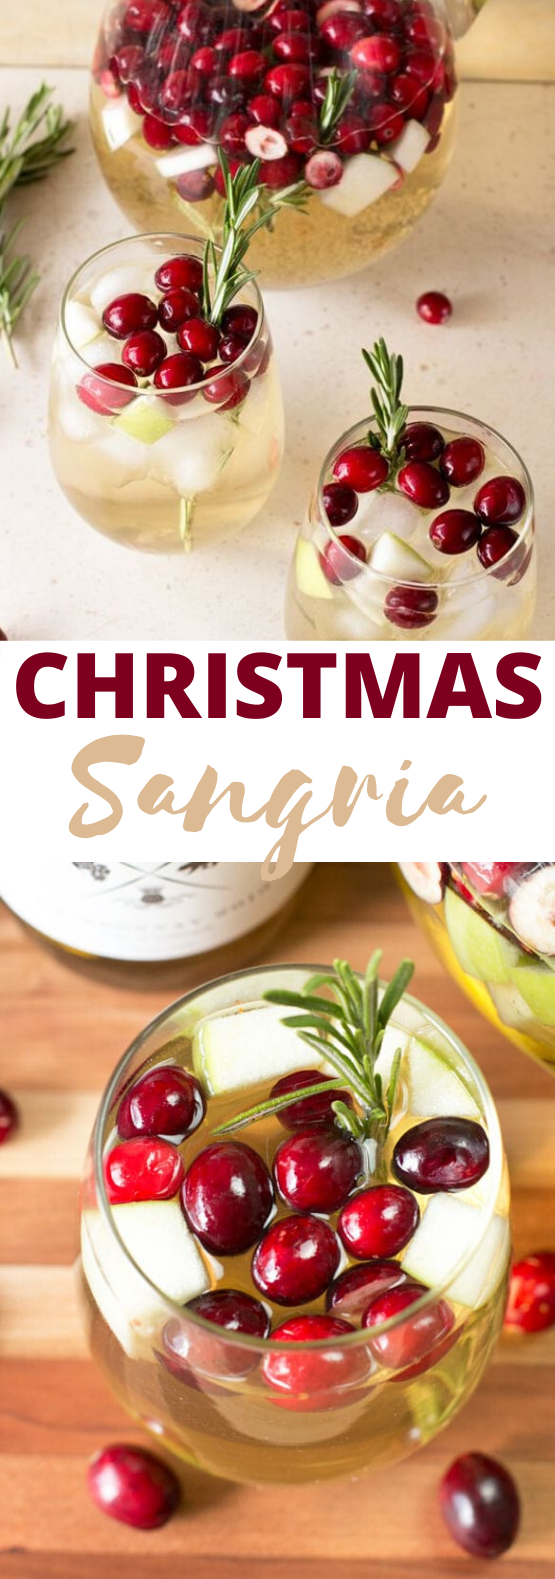 Christmas Sangria #drinks #alcohol #sangria #punch #holiday